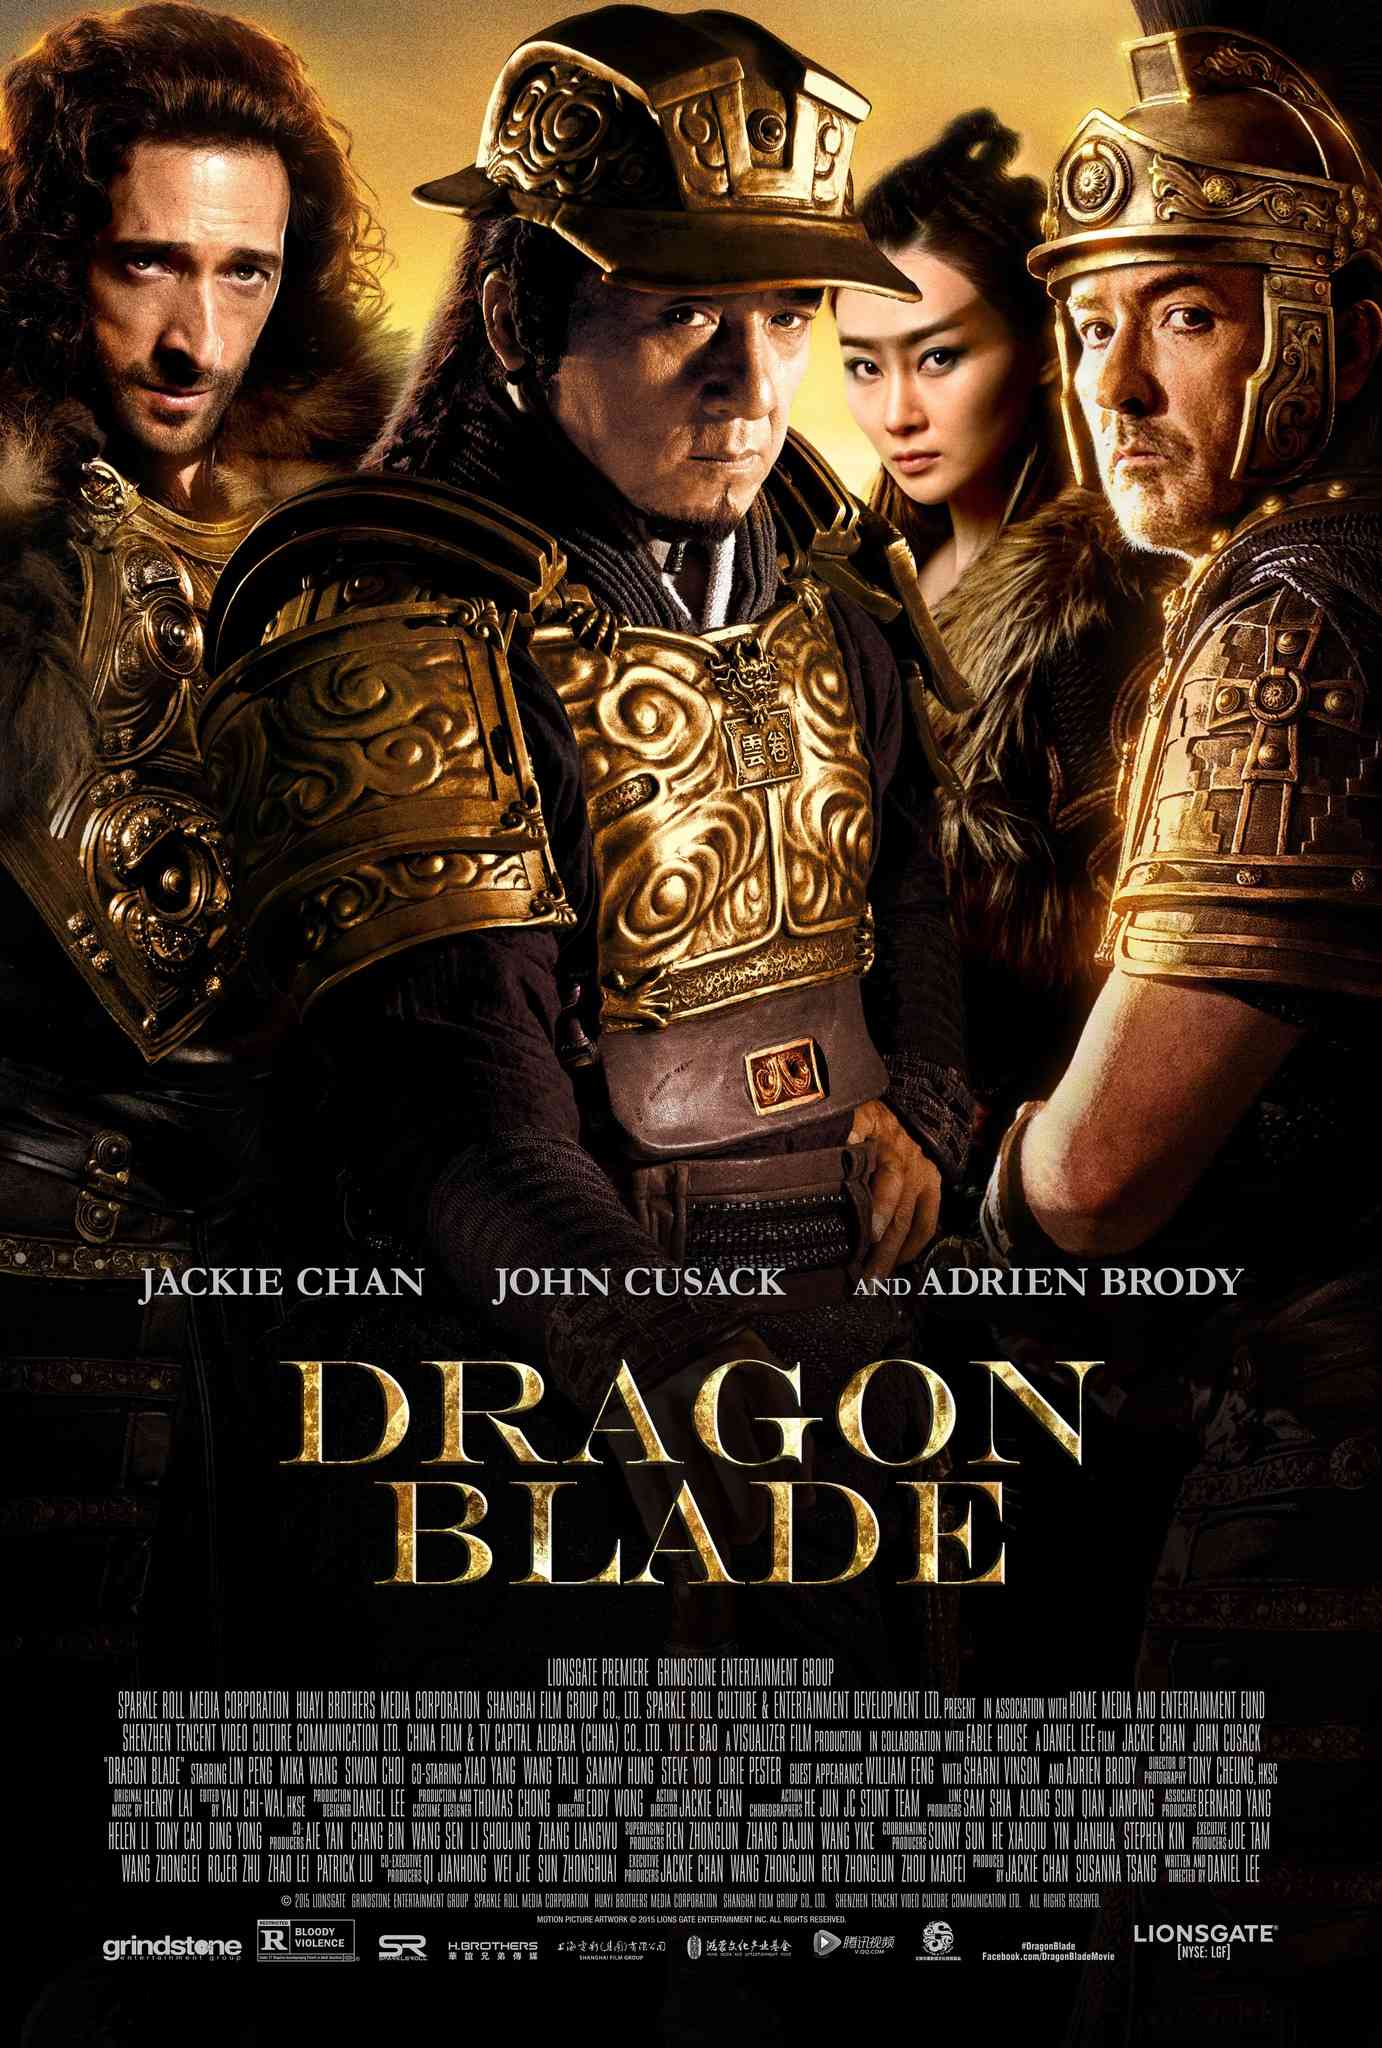 FULL MOVIE: Dragon Blade (2015) [Action]